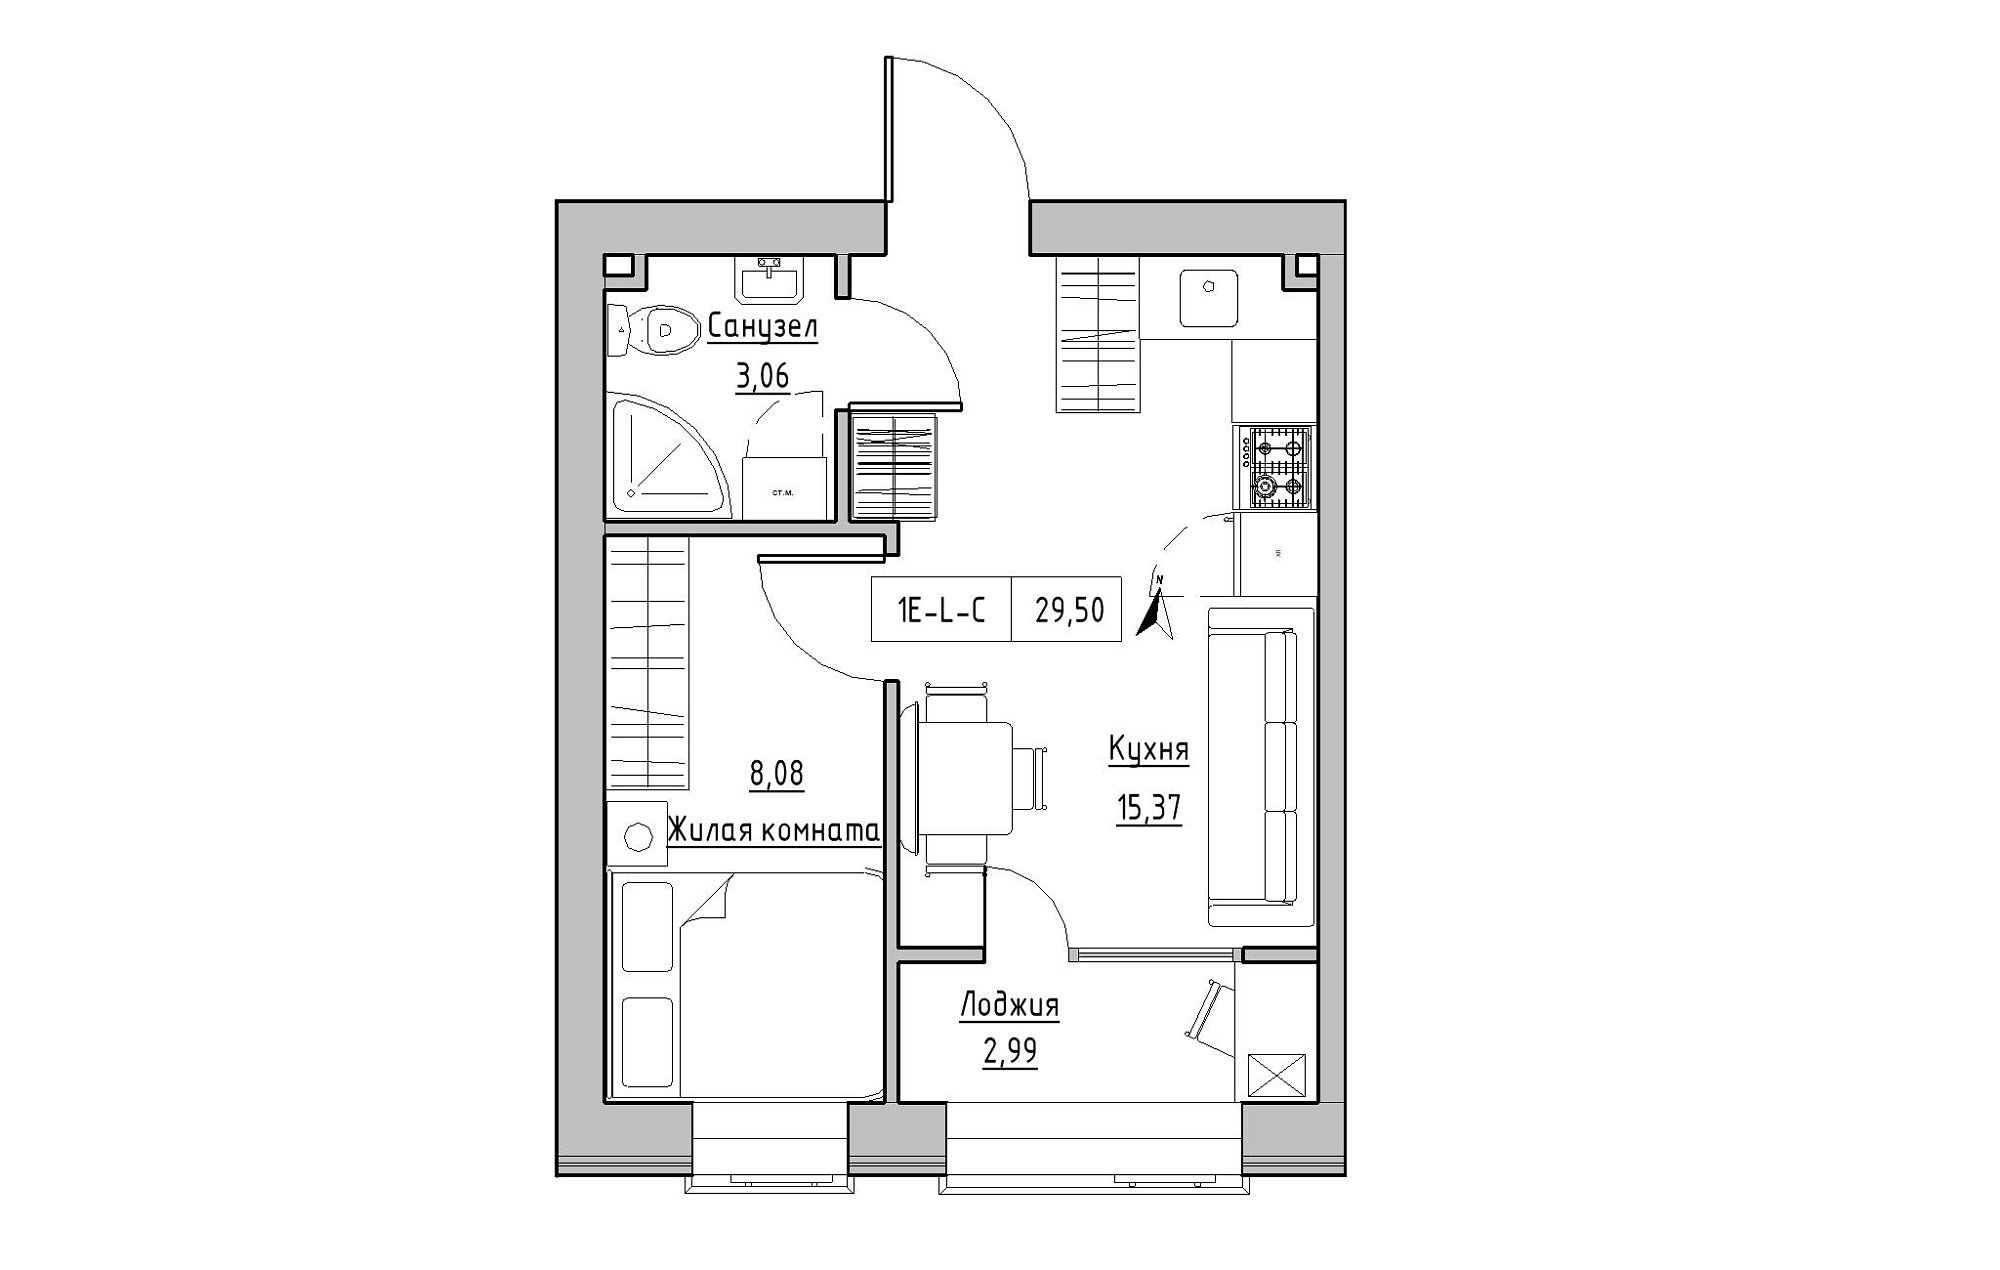 Planning 1-rm flats area 29.5m2, KS-019-02/0010.